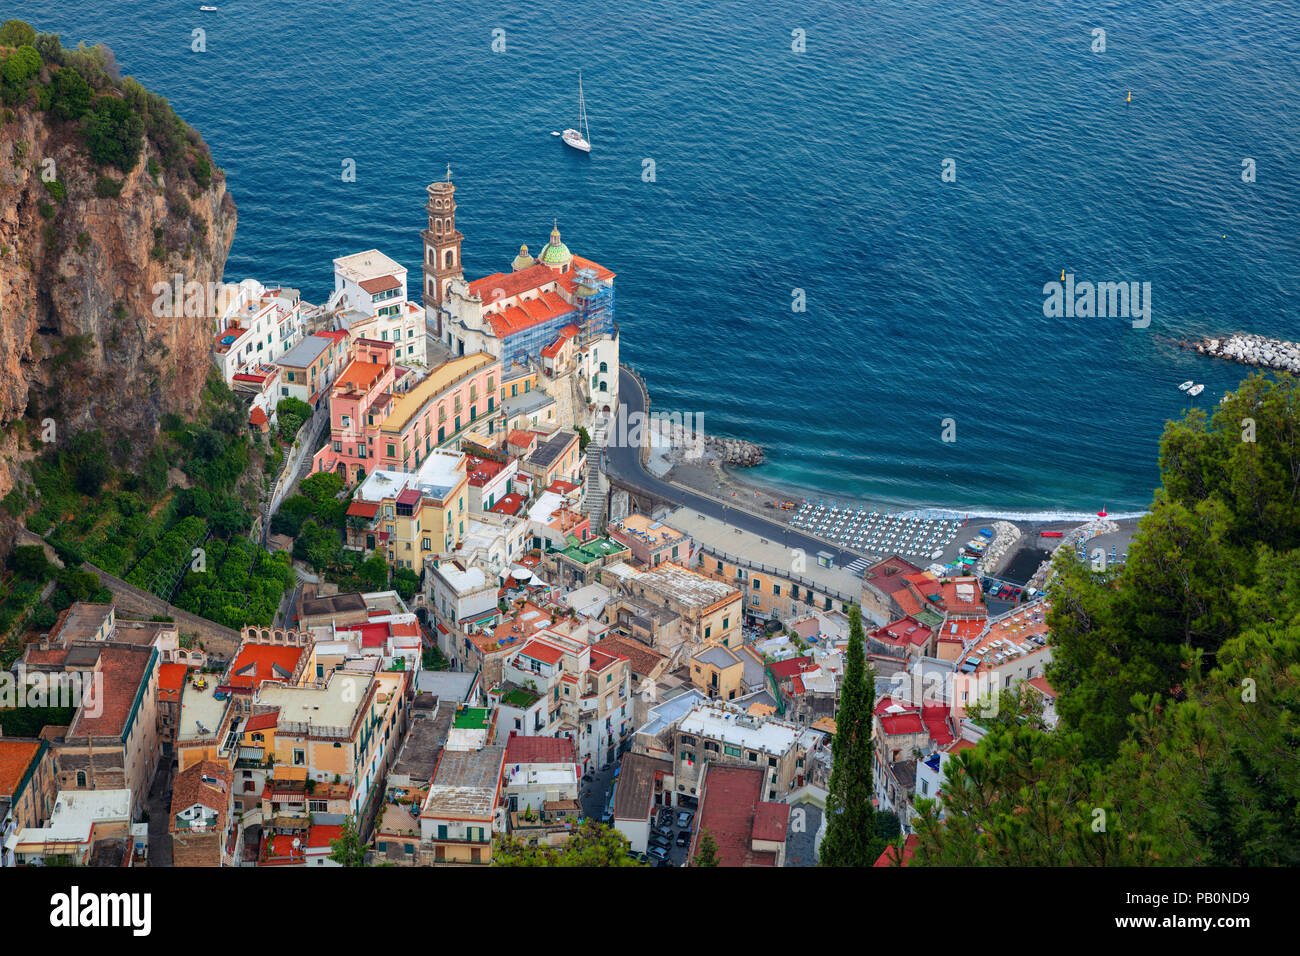 Atrani. Aerial view of Atrani famous coastal village located on Amalfi Coast, Italy. Stock Photo